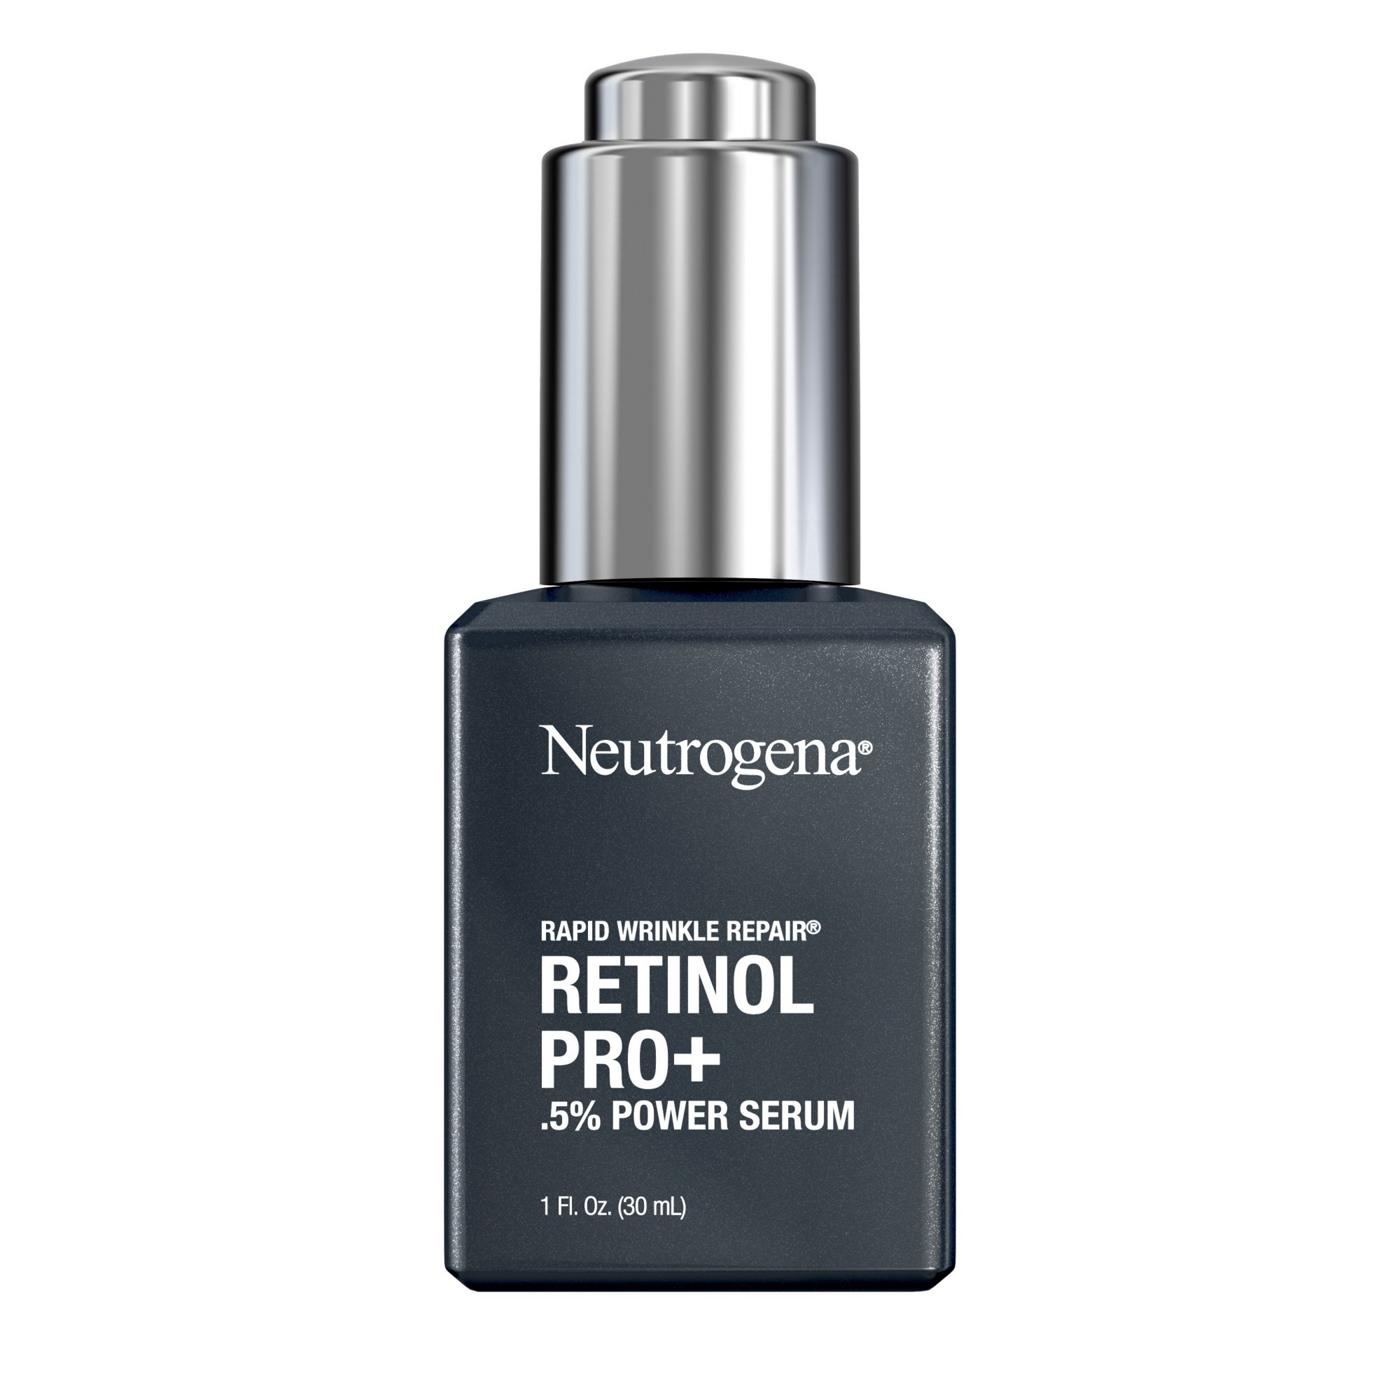 Neutrogena Rapid Wrinkle Repair Retinol Pro+ .5% Power Serum; image 5 of 5